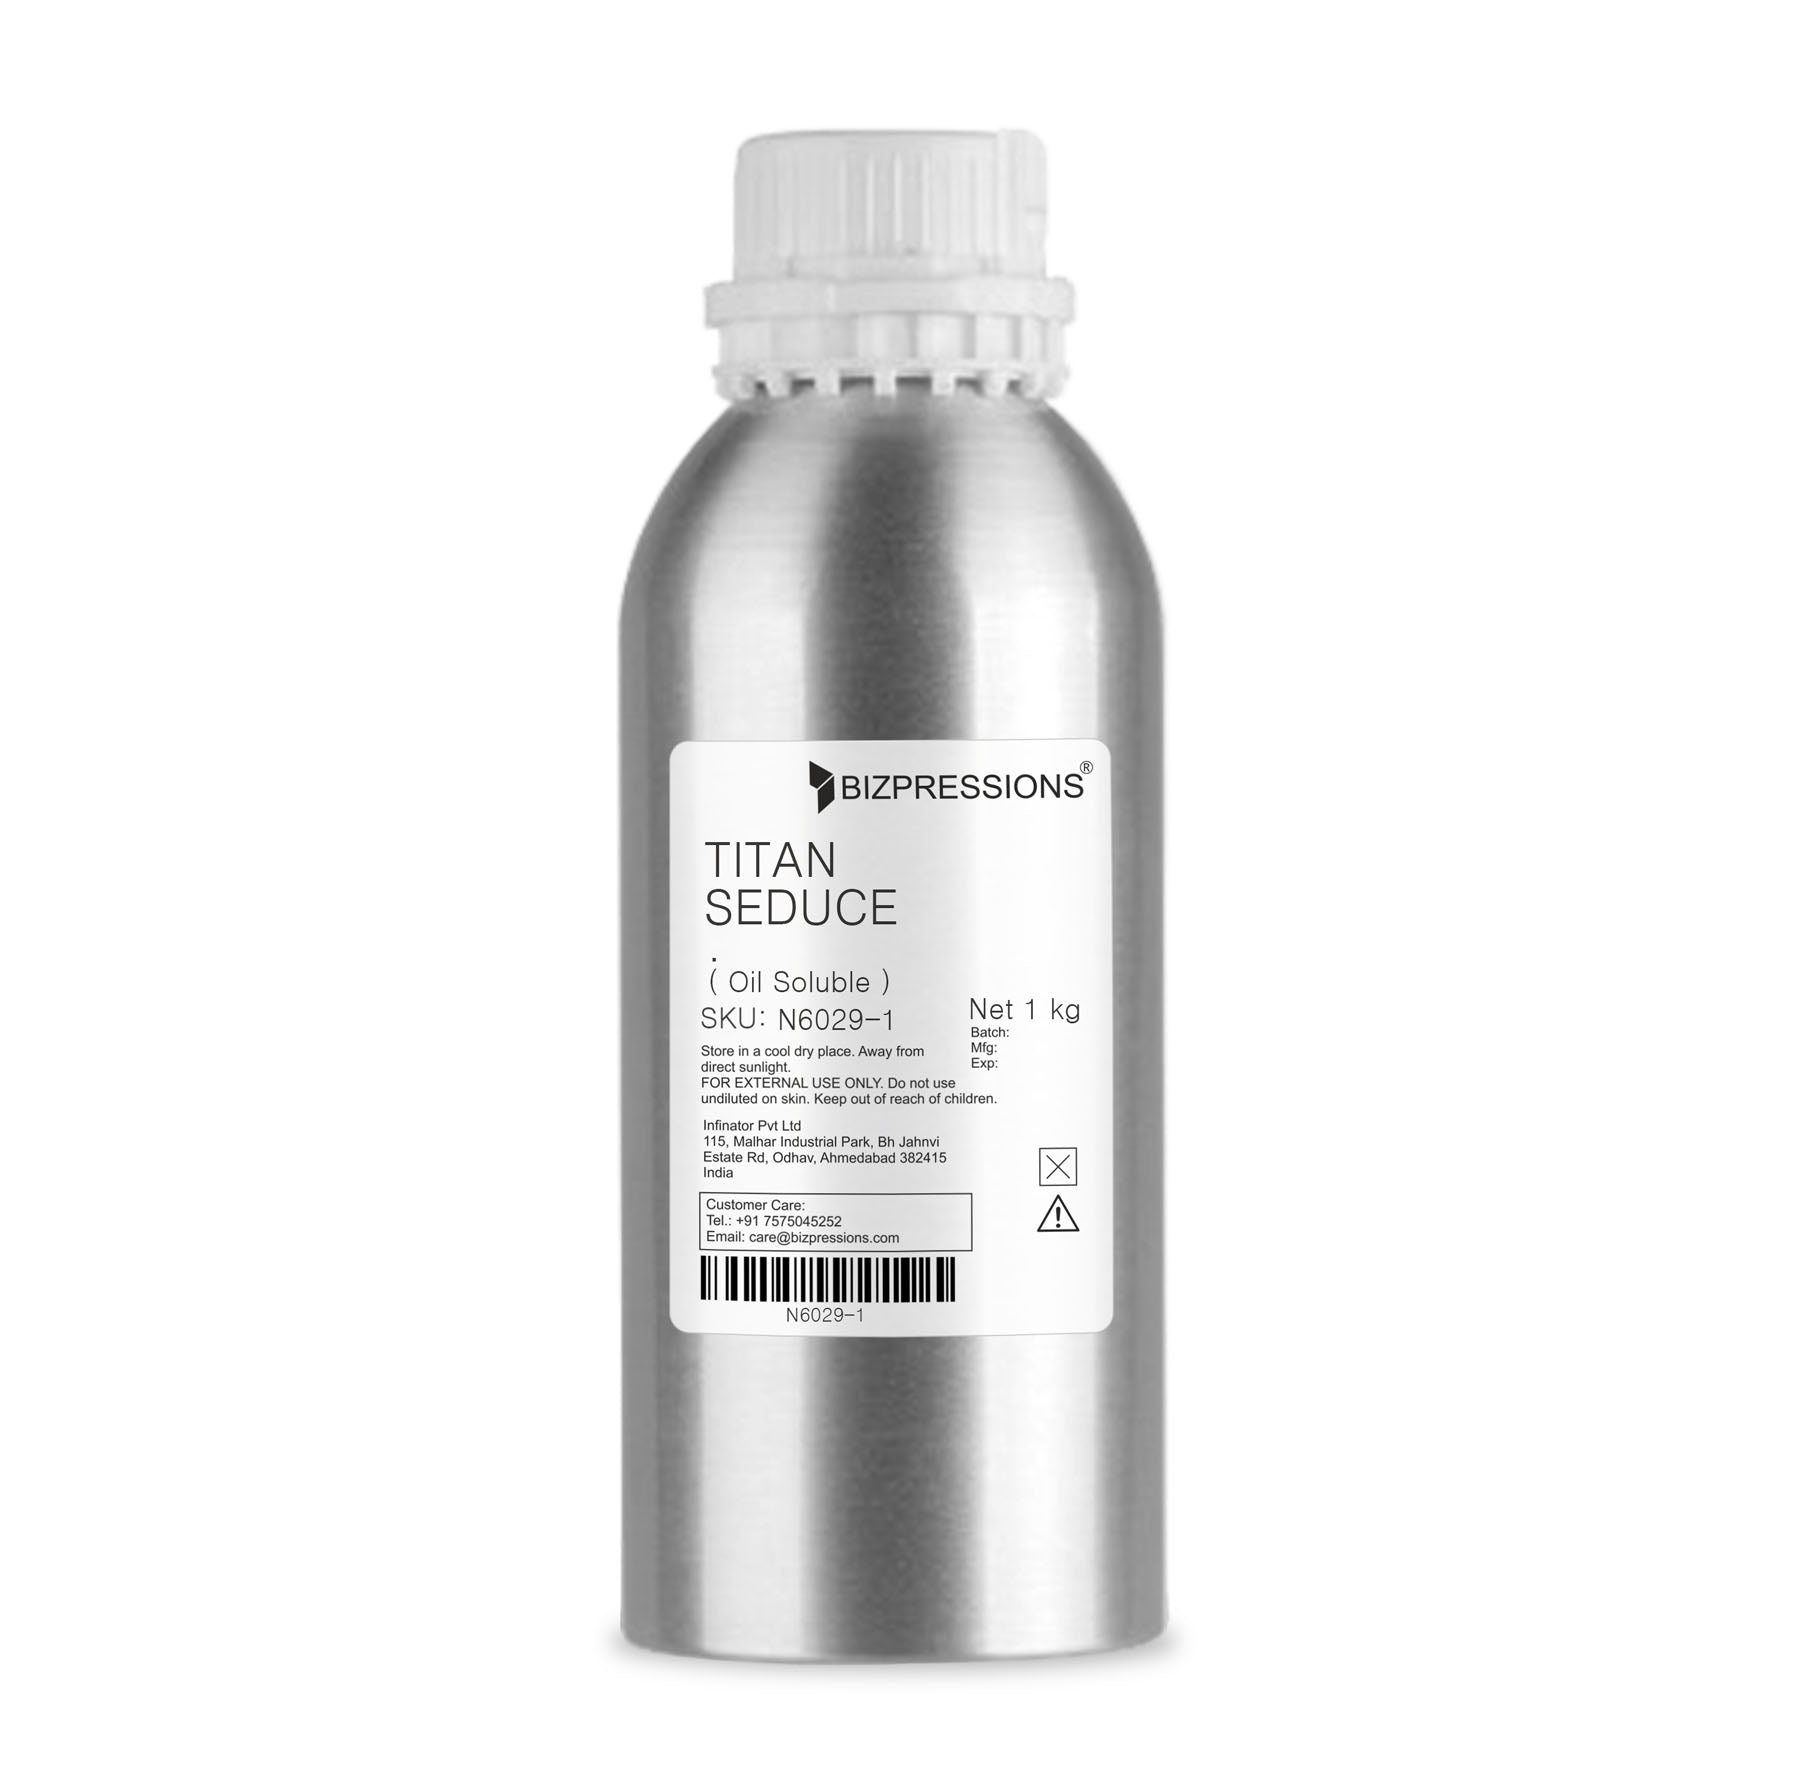 TITAN SEDUCE - Fragrance ( Oil Soluble ) - 1 kg